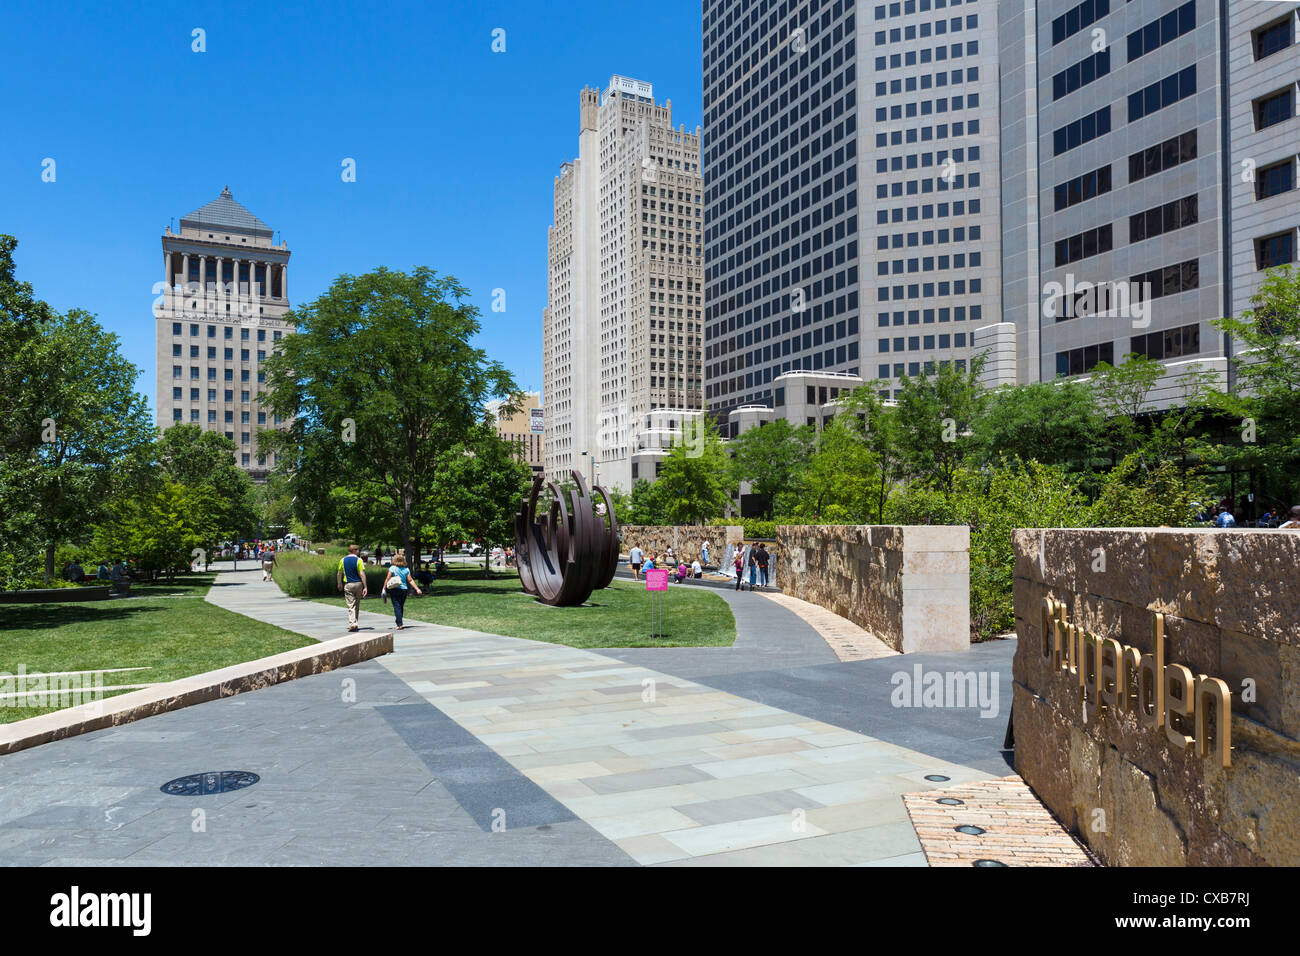 Citygarden Urban Park And Sculpture Garden In Downtown St Louis